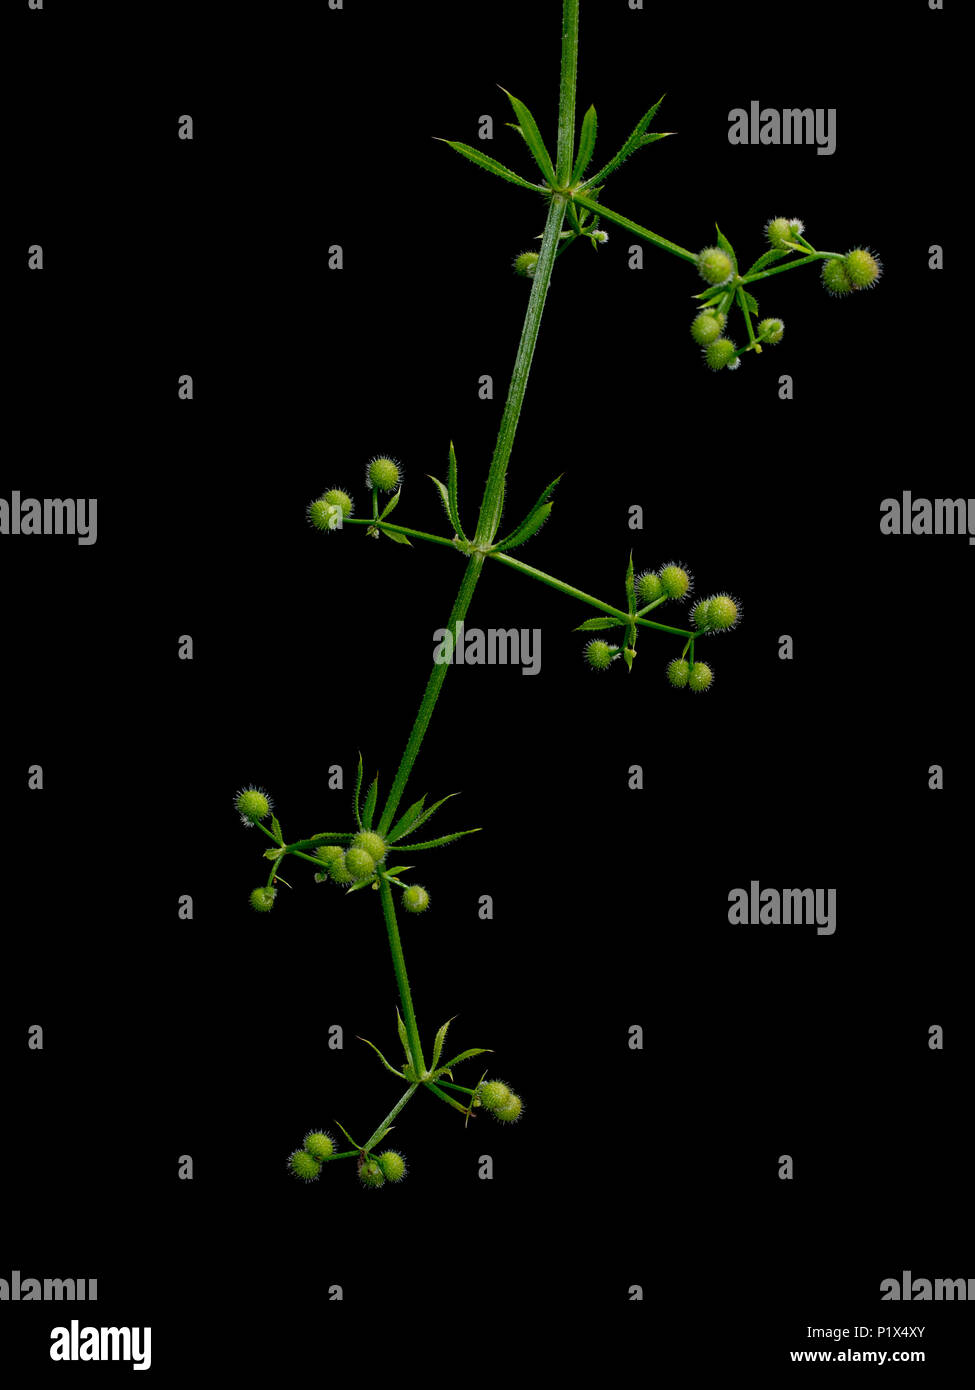 Aka goosegrass Galium aparine, cleavers. Peludo, pegajoso clingy planta, hierba. Detalle aislado en negro. Foto de stock